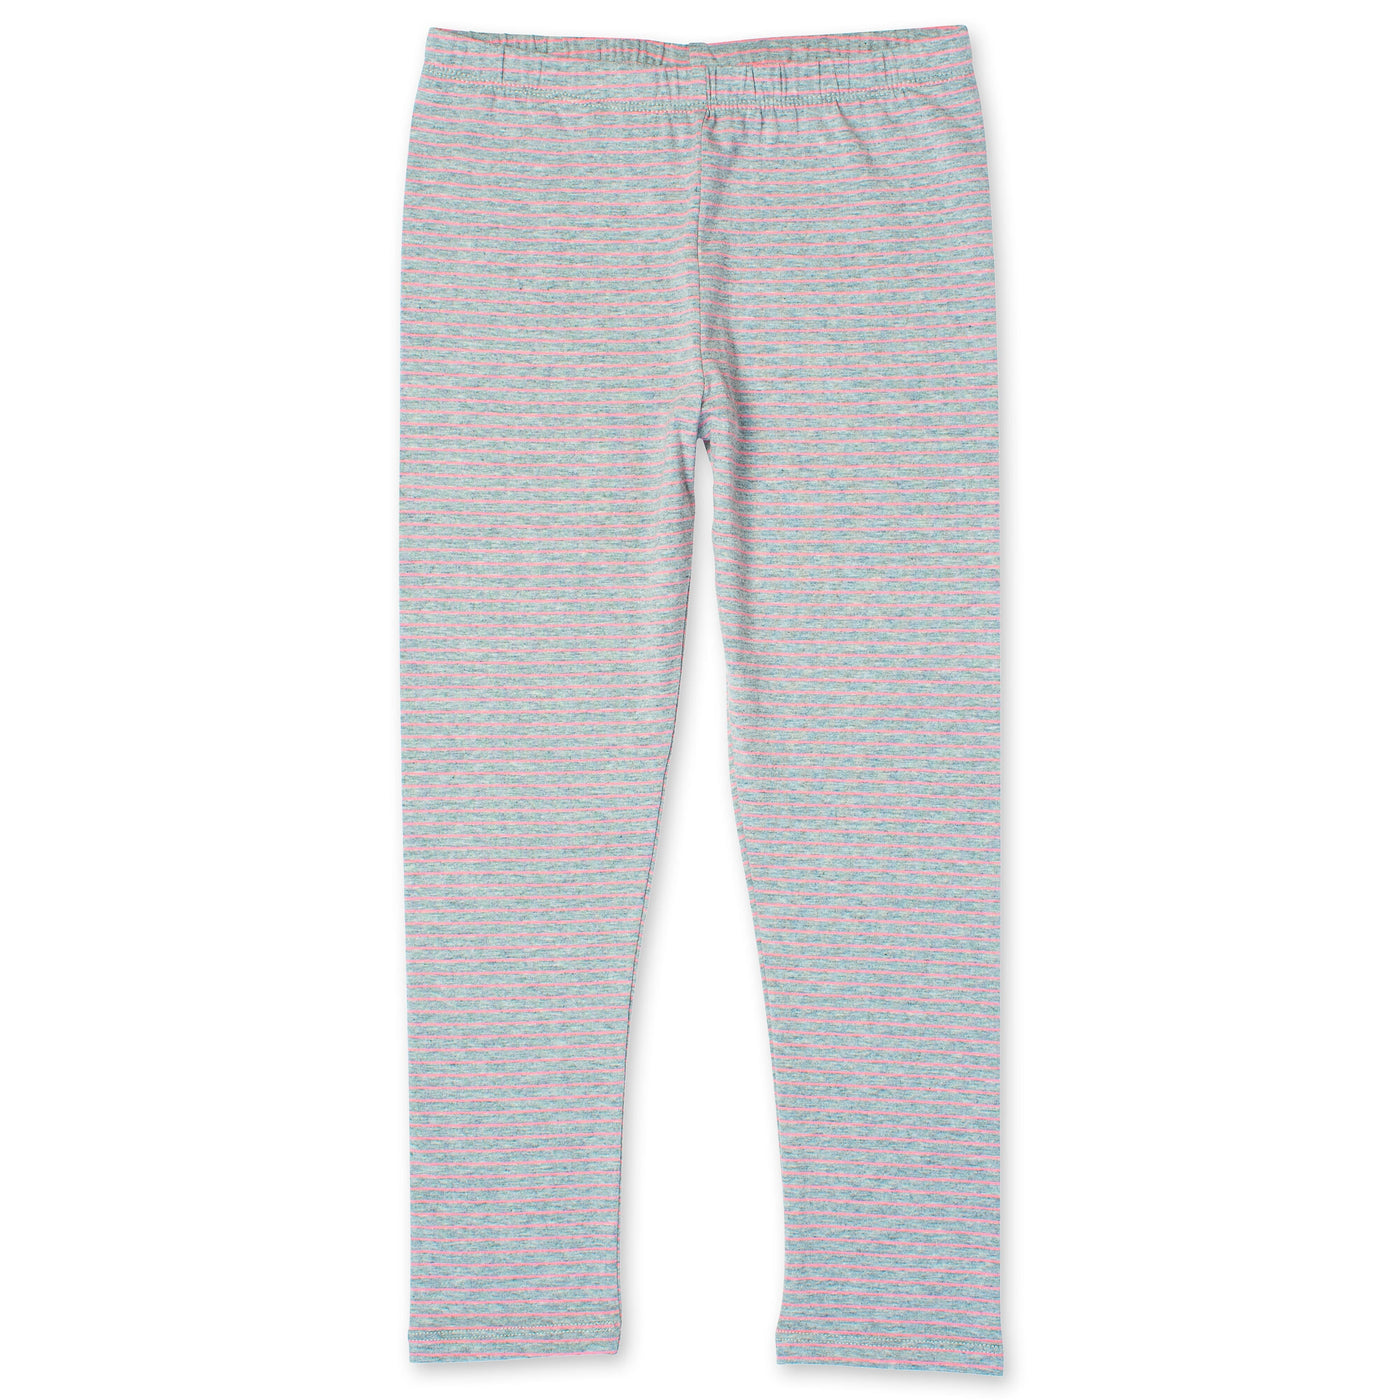 Stripe Tights - Grey/Pink Stripe Leggings Minti 